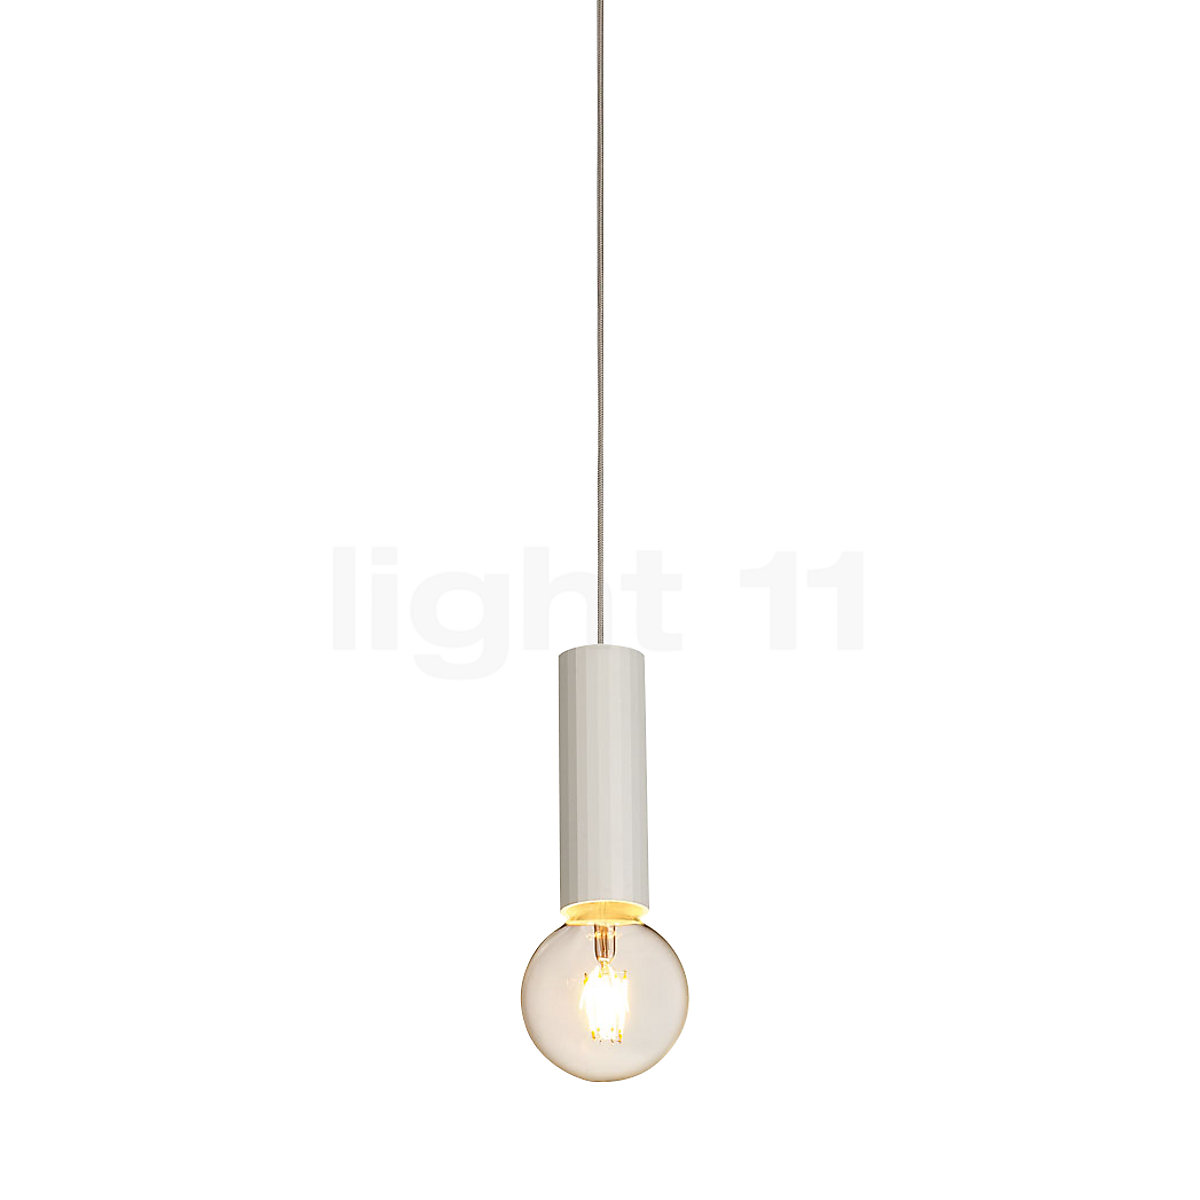 Buy Light Pendant Light at light11.eu